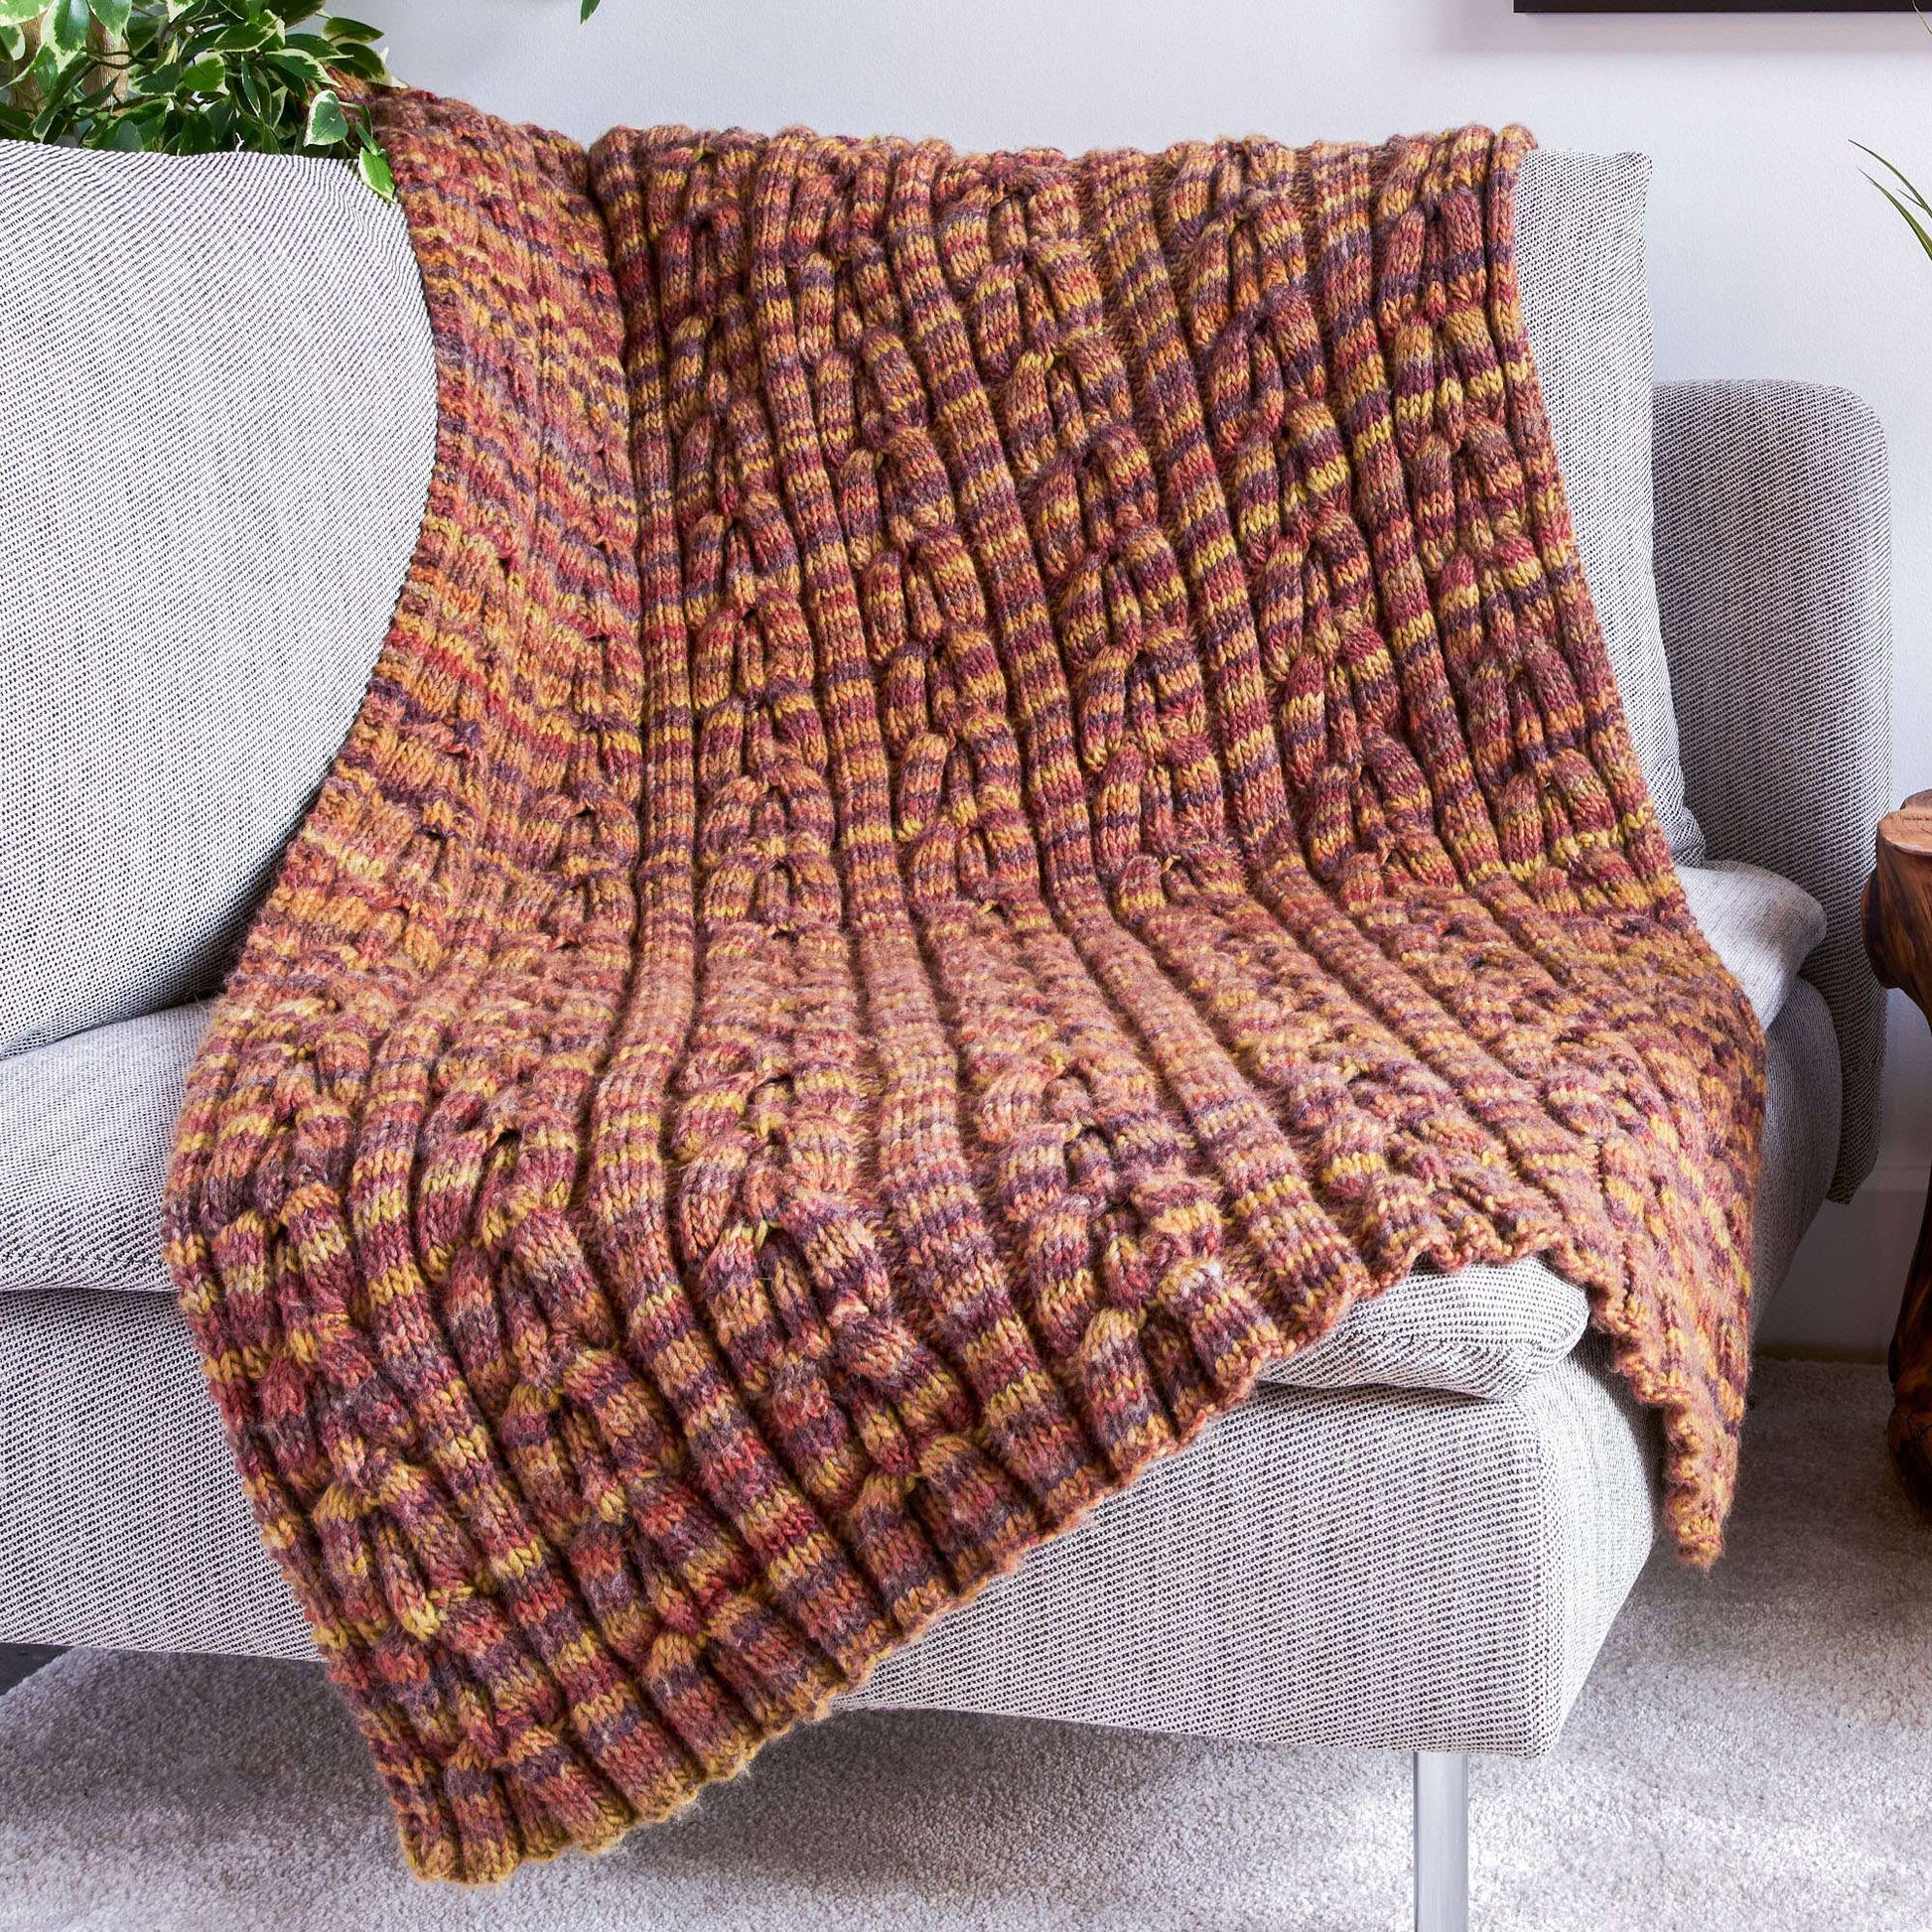 Free Bernat Cable Texture Knit Blanket Pattern